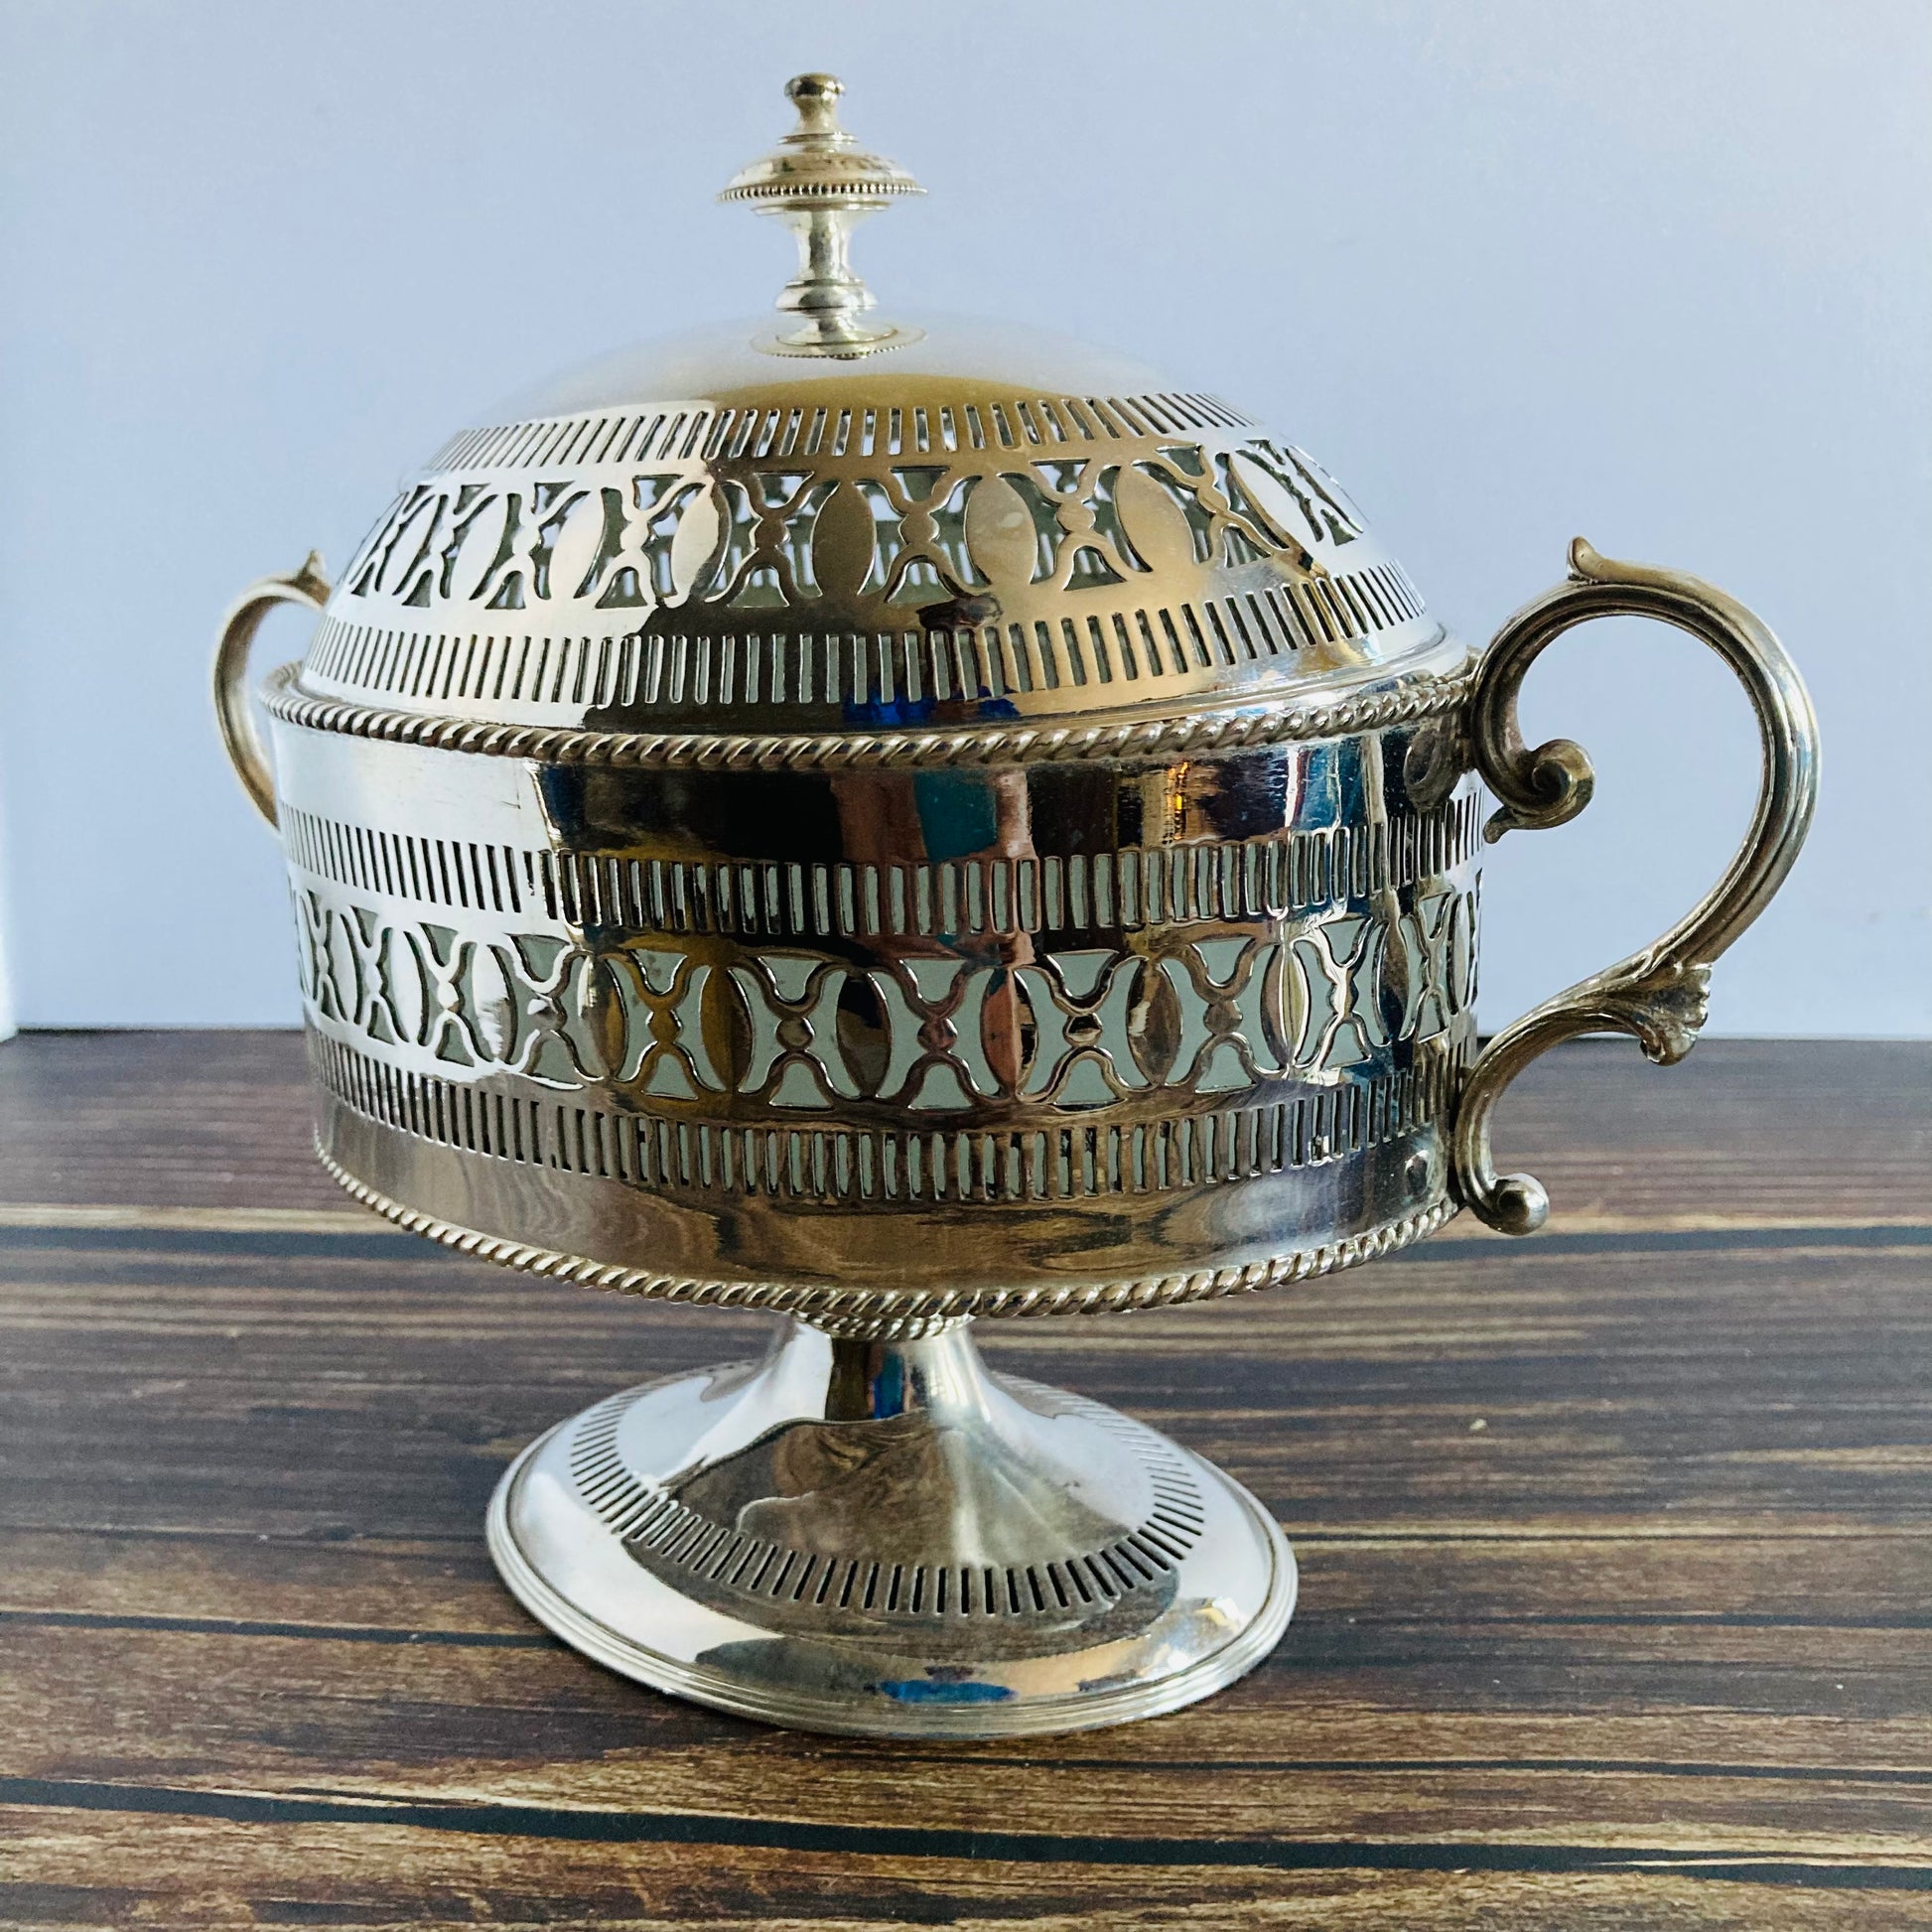 Antique Silver Trophy Shaped Pierced Lidded Potpourri Dish 